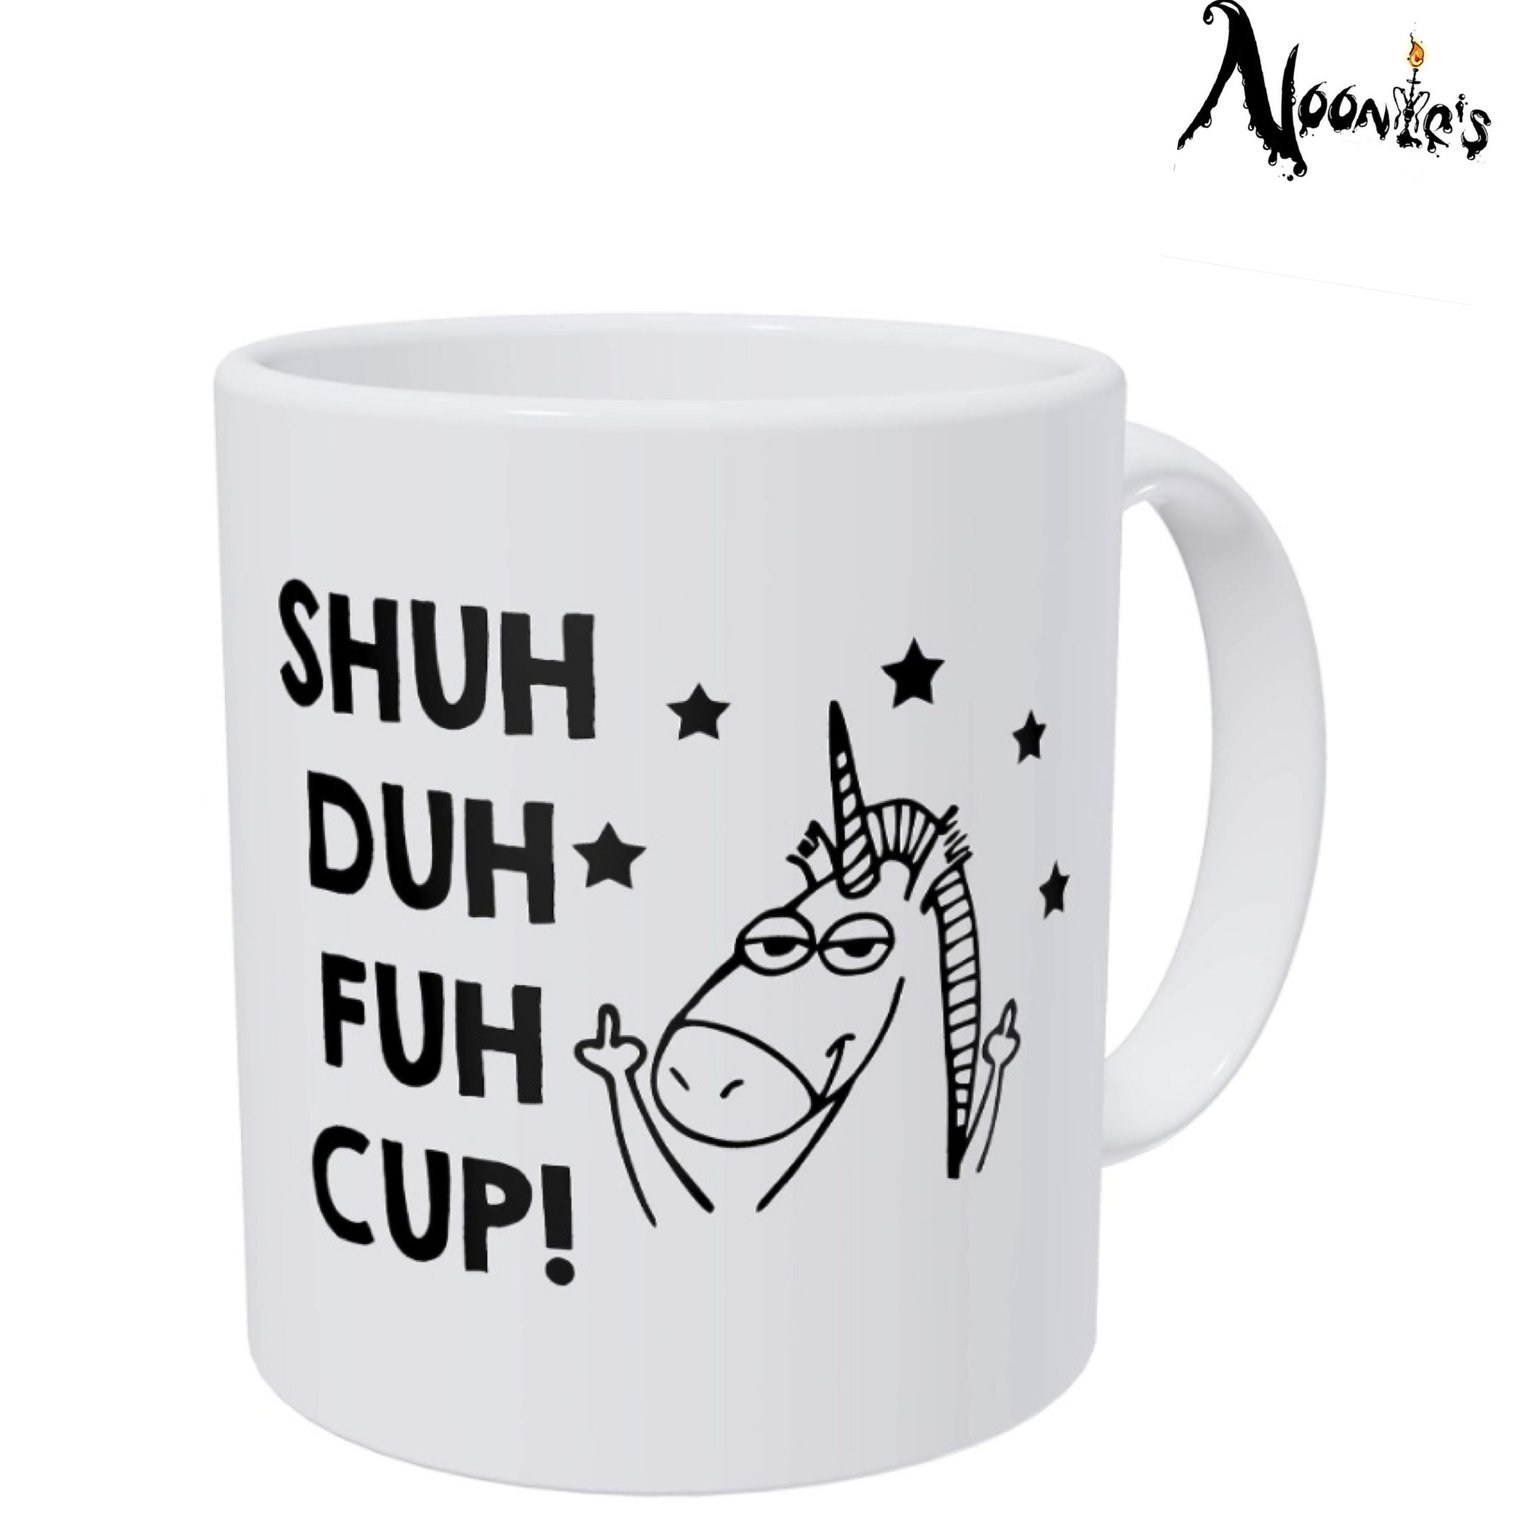 Image of Your new favorite mug